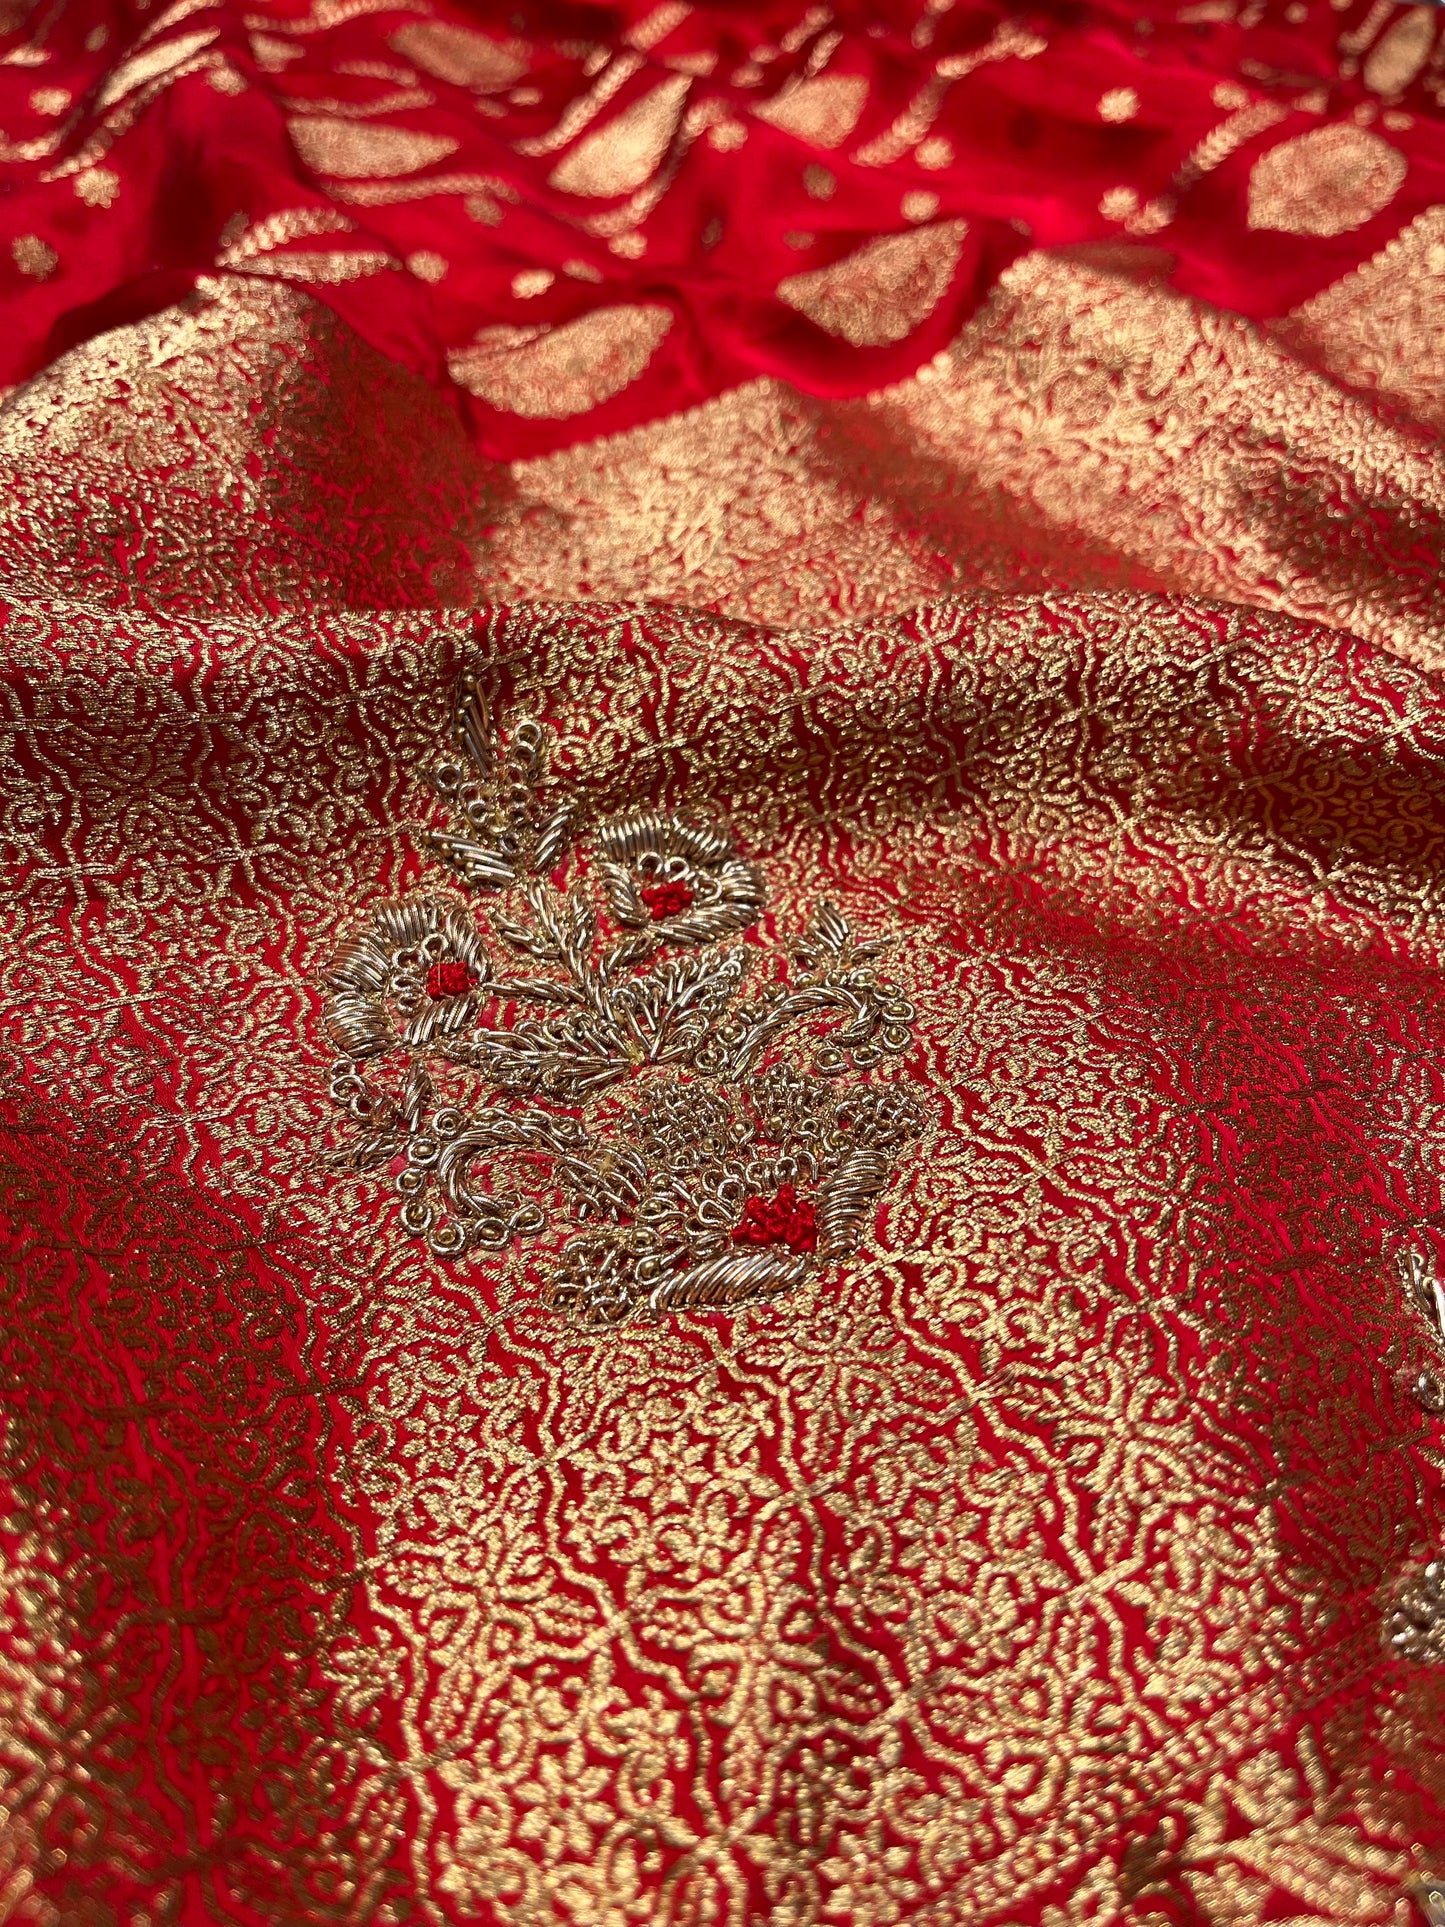 RED COLOUR SATIN SILK HAND EMBROIDERED BANARASI SCALLOPED BORDER SAREE EMBELLISHED WITH ZARDOZI WORK